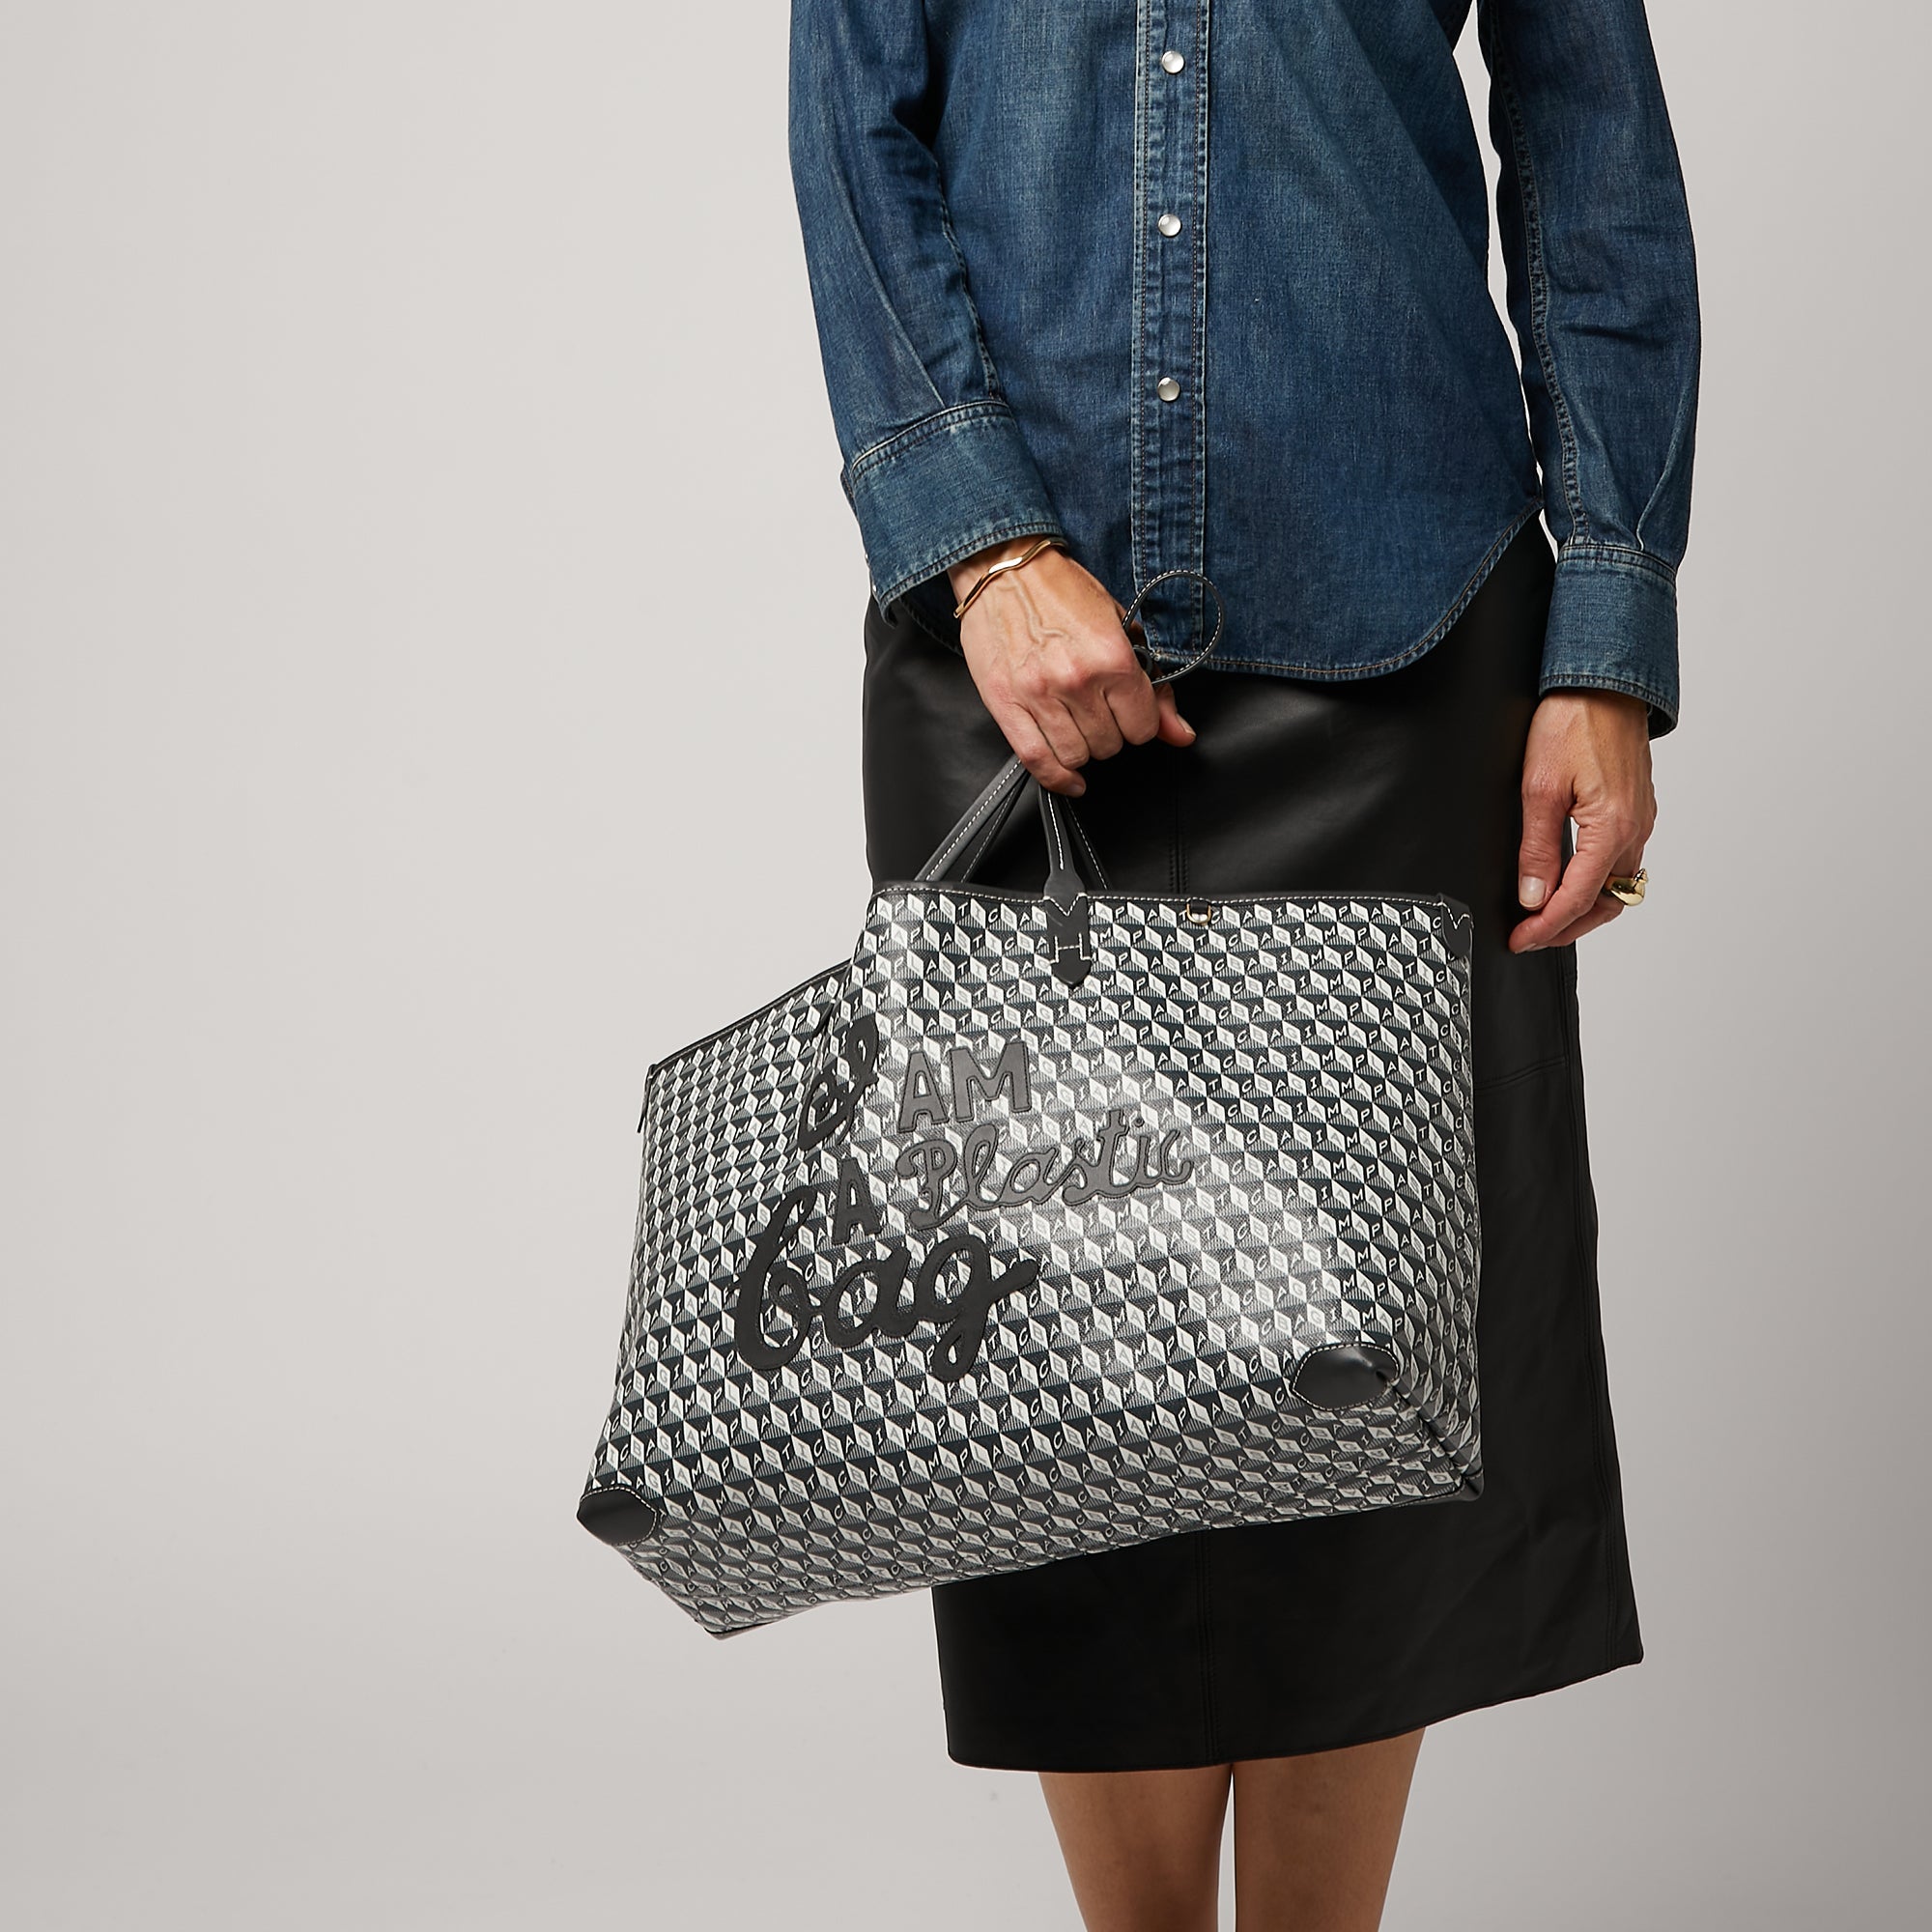 Totes bags Anya Hindmarch - I Am A Plastic Bag Tote XL Shopping